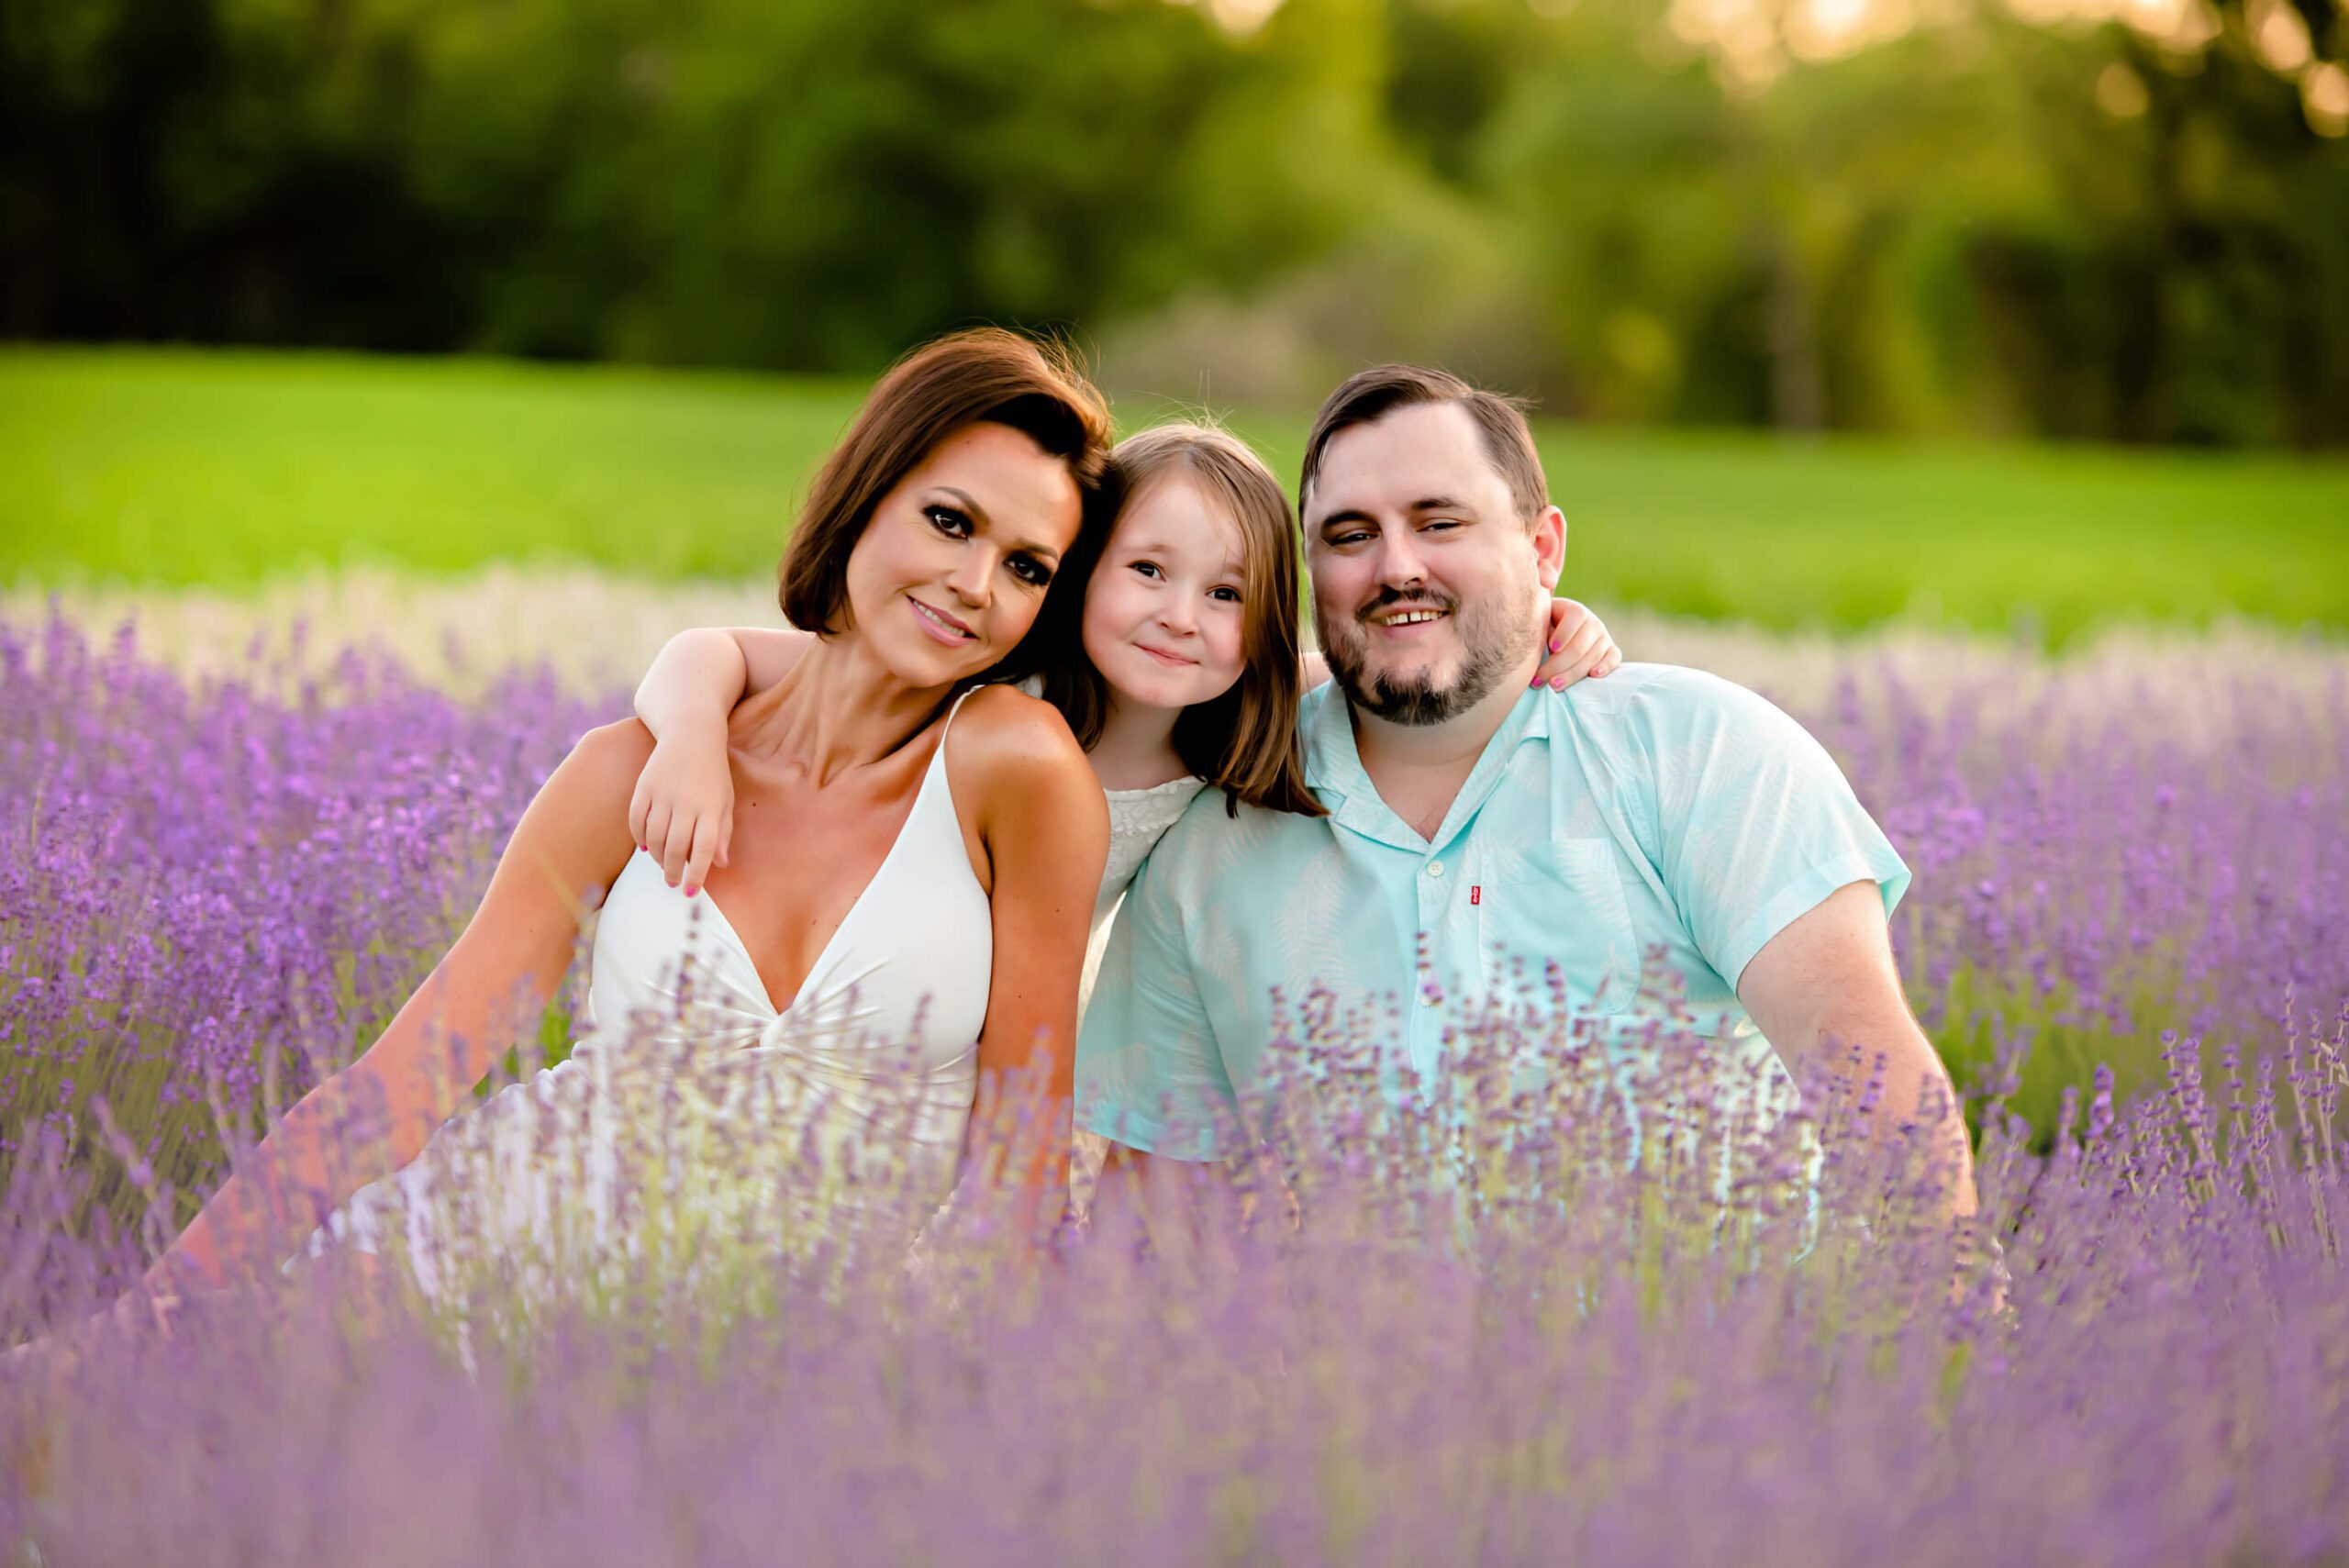 Family Photographer In Burlington Ontario In Lavender Field